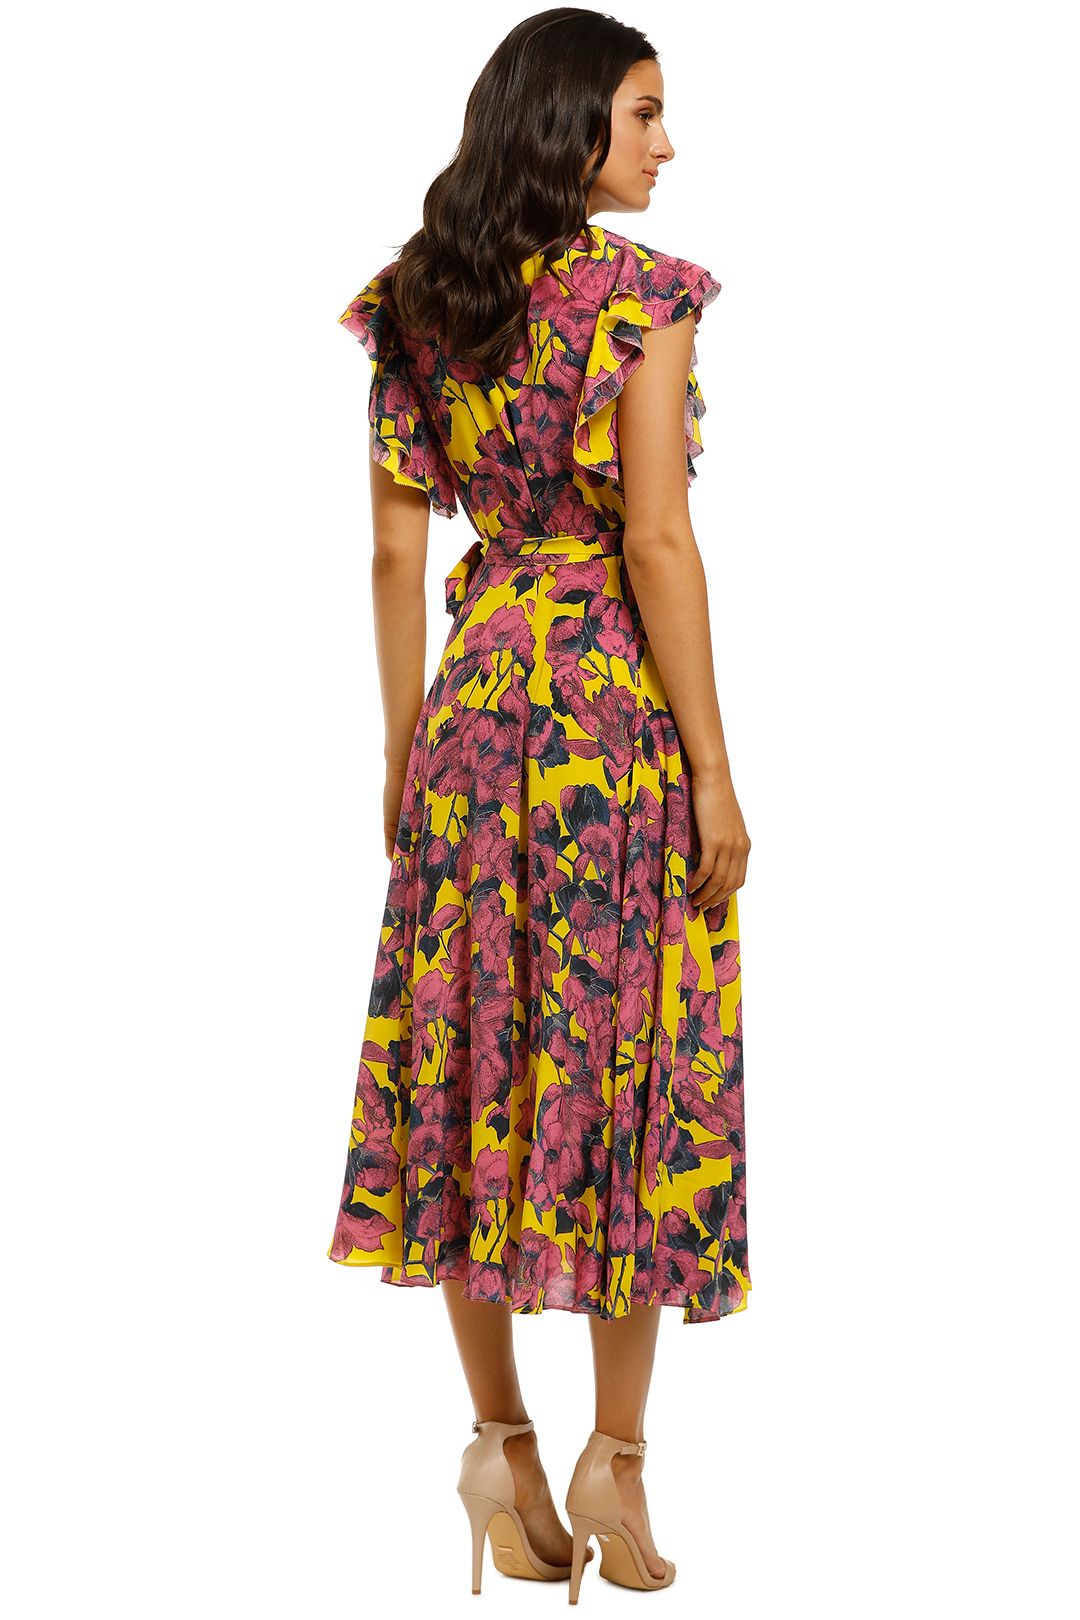 Tropicana Dress in Pineapple by Husk for Rent | GlamCorner